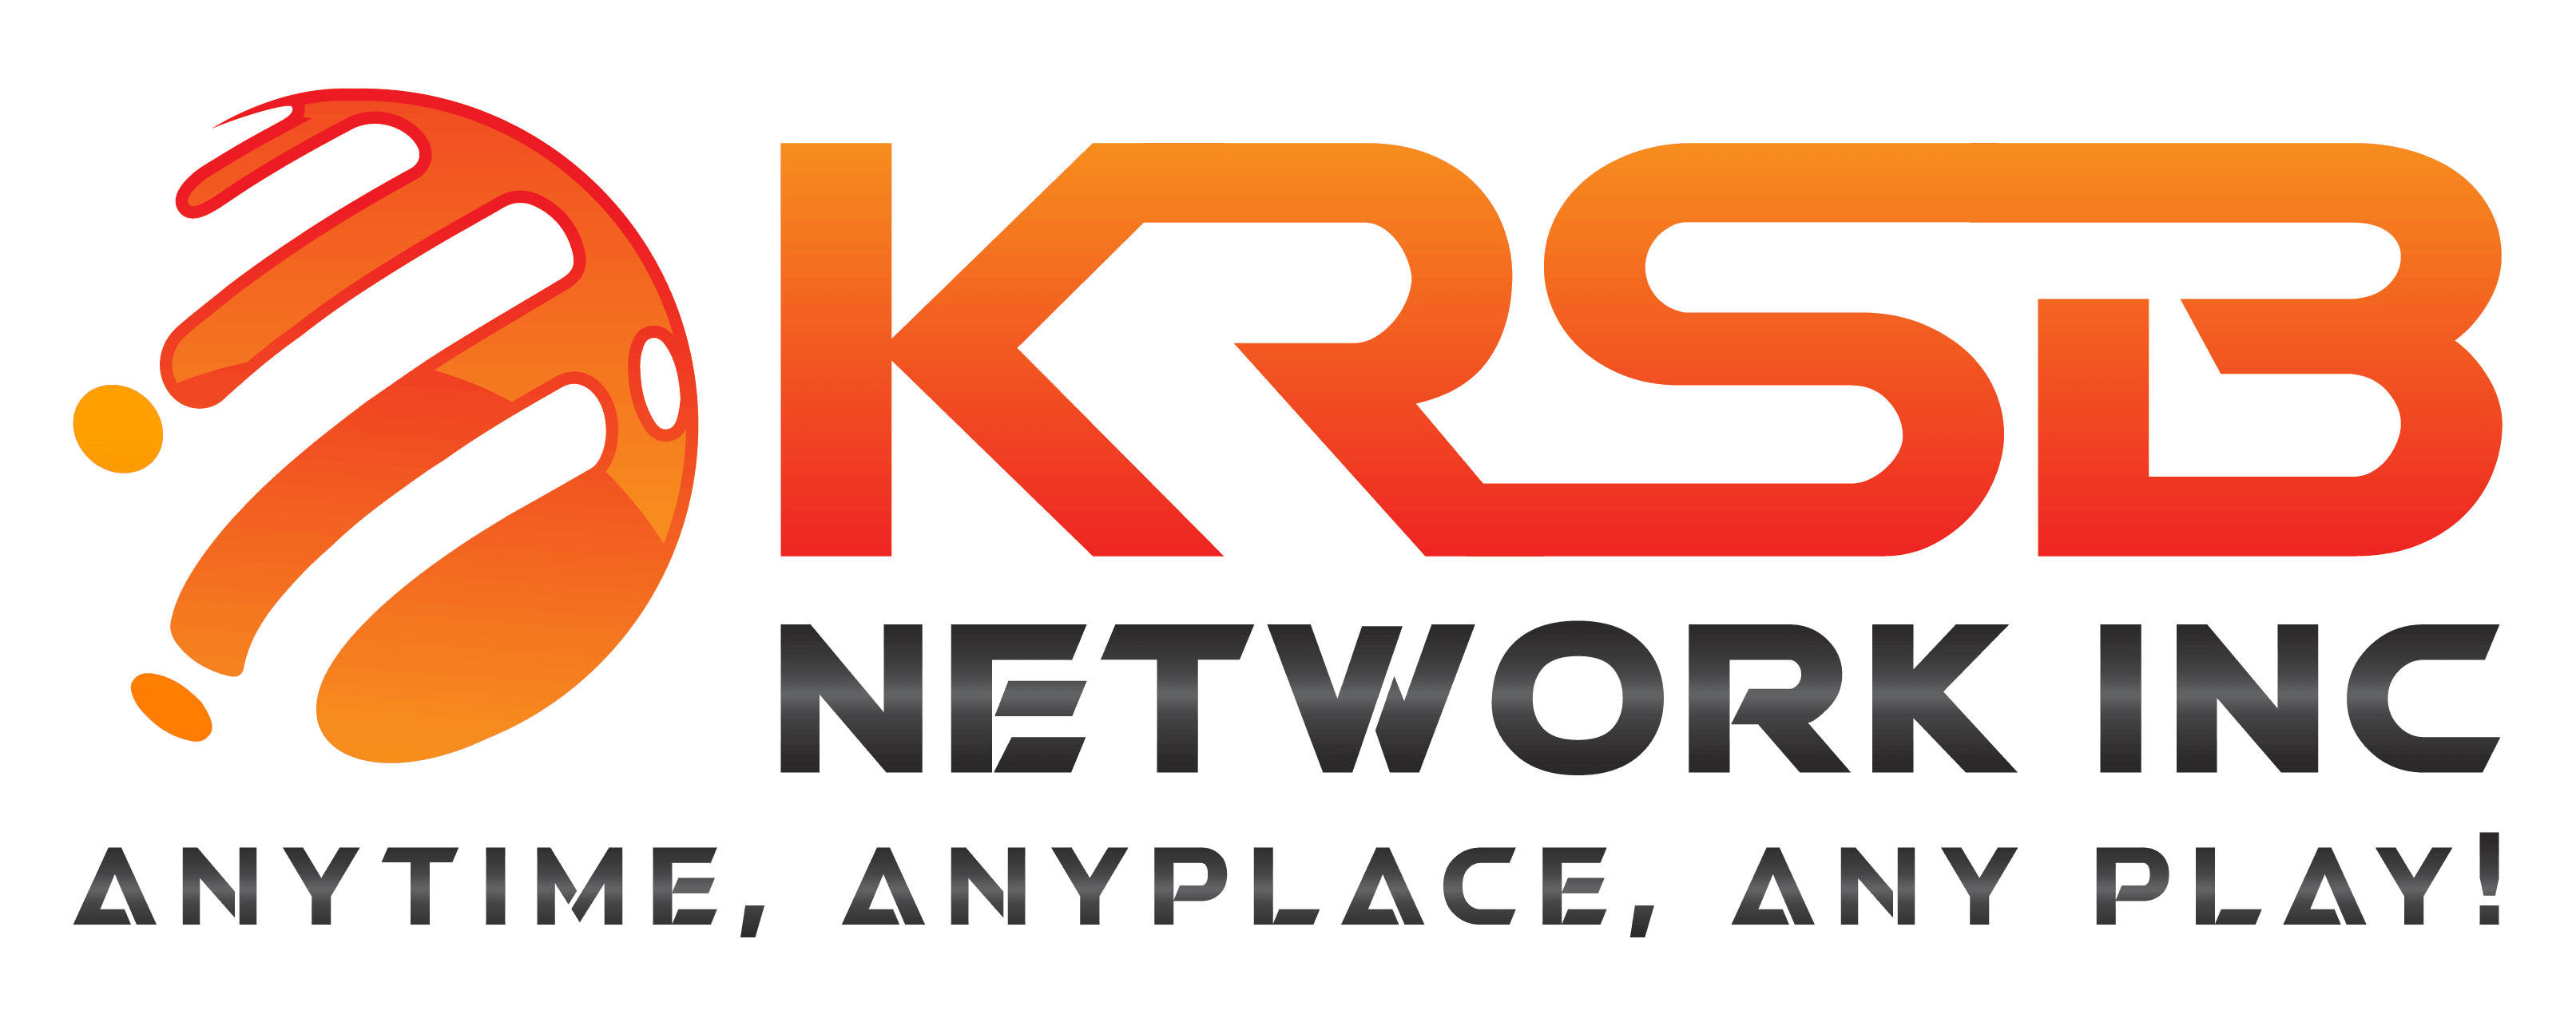 KRSB NETWORK Inc.